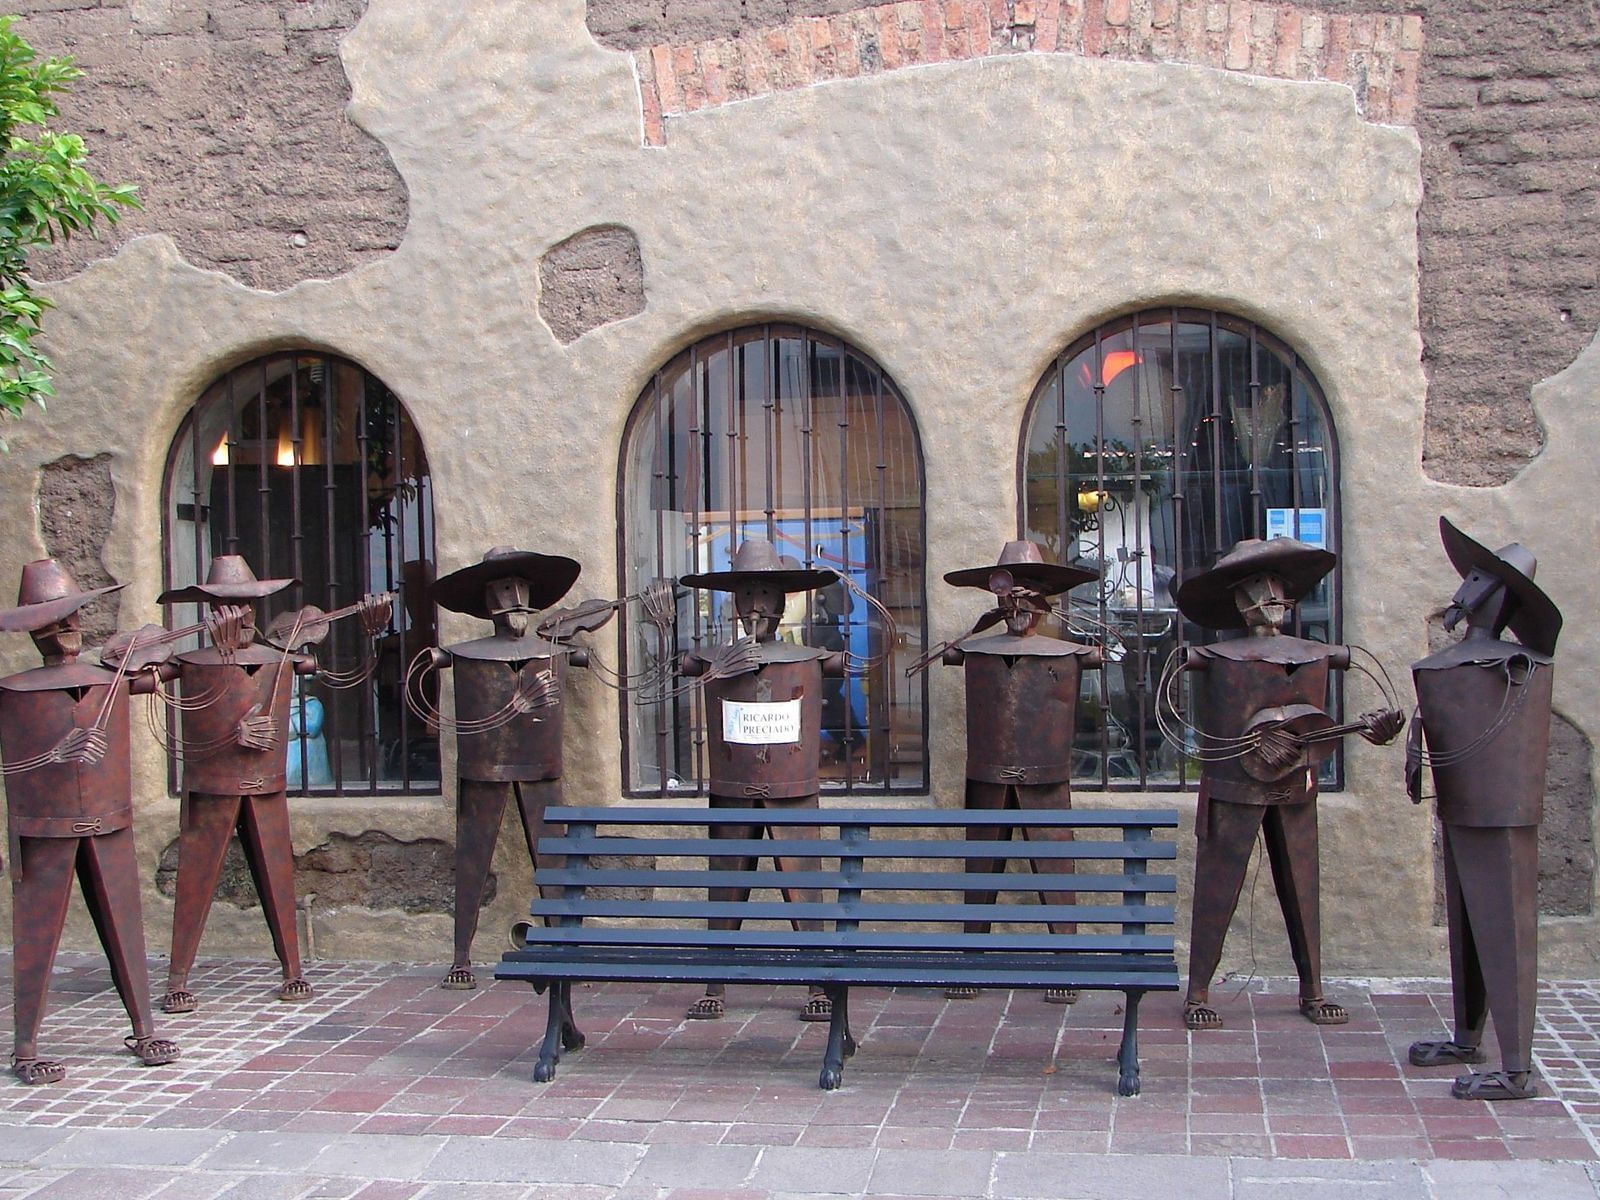 Models of soldiers, Plaza De Los Mariachis, Hotel Guadalajara